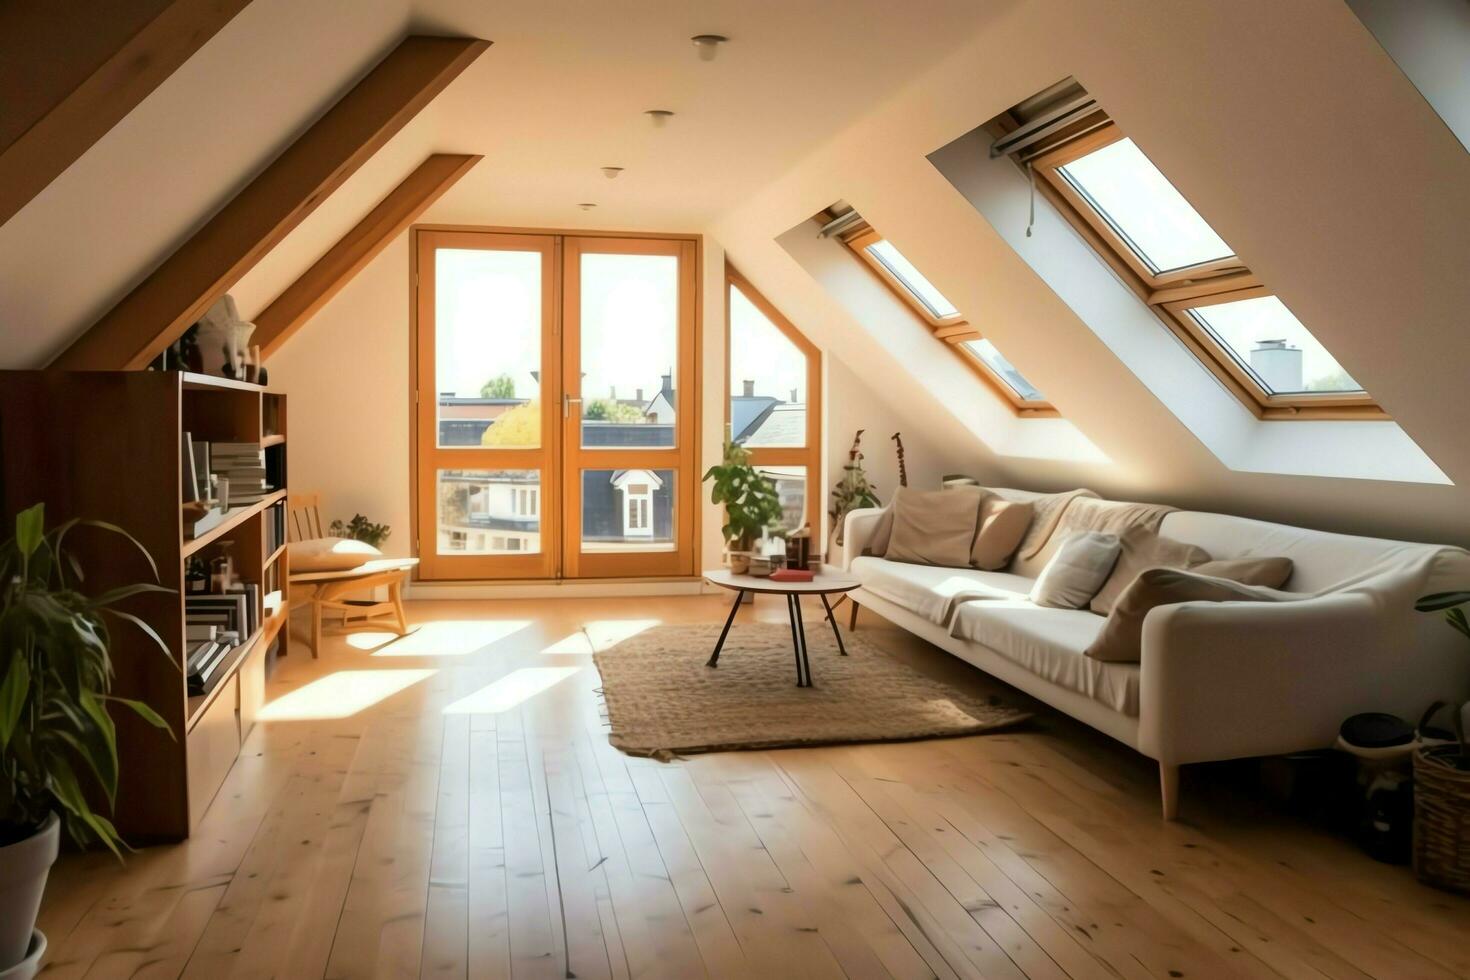 modern Dachgaube Dachgeschoss Umwandlung Innere Design im Wohnung oder Haus beim Vereinigtes Königreich. Luxus Dreieck Dachboden Zimmer Konzept durch ai generiert foto